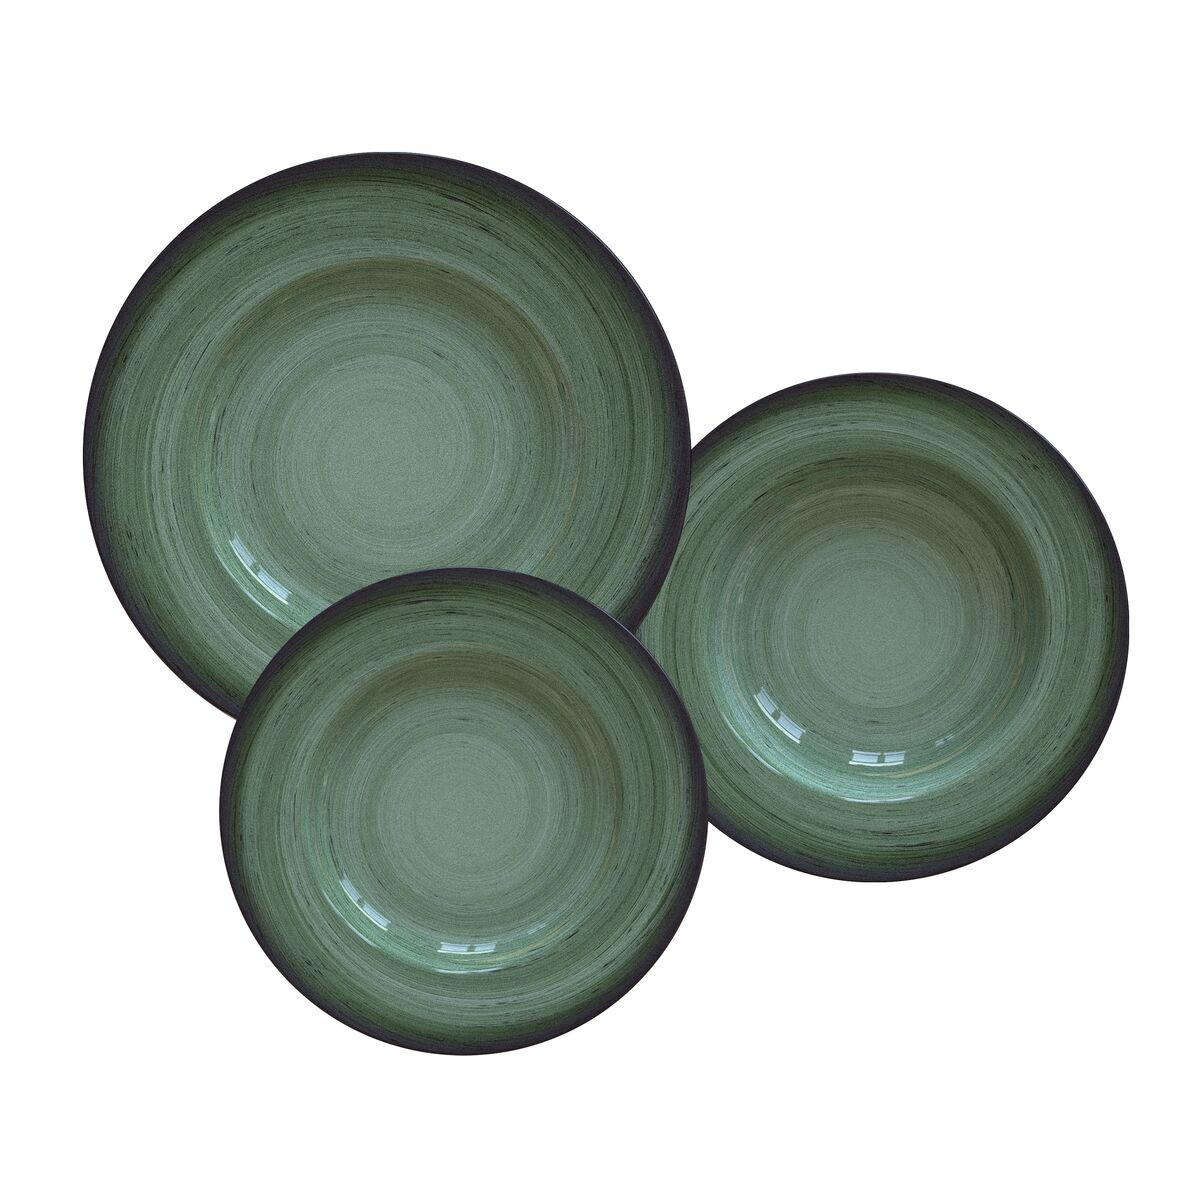 Tramontina Rústico Green 12-Piece Decorated Porcelain Dinnerware Set